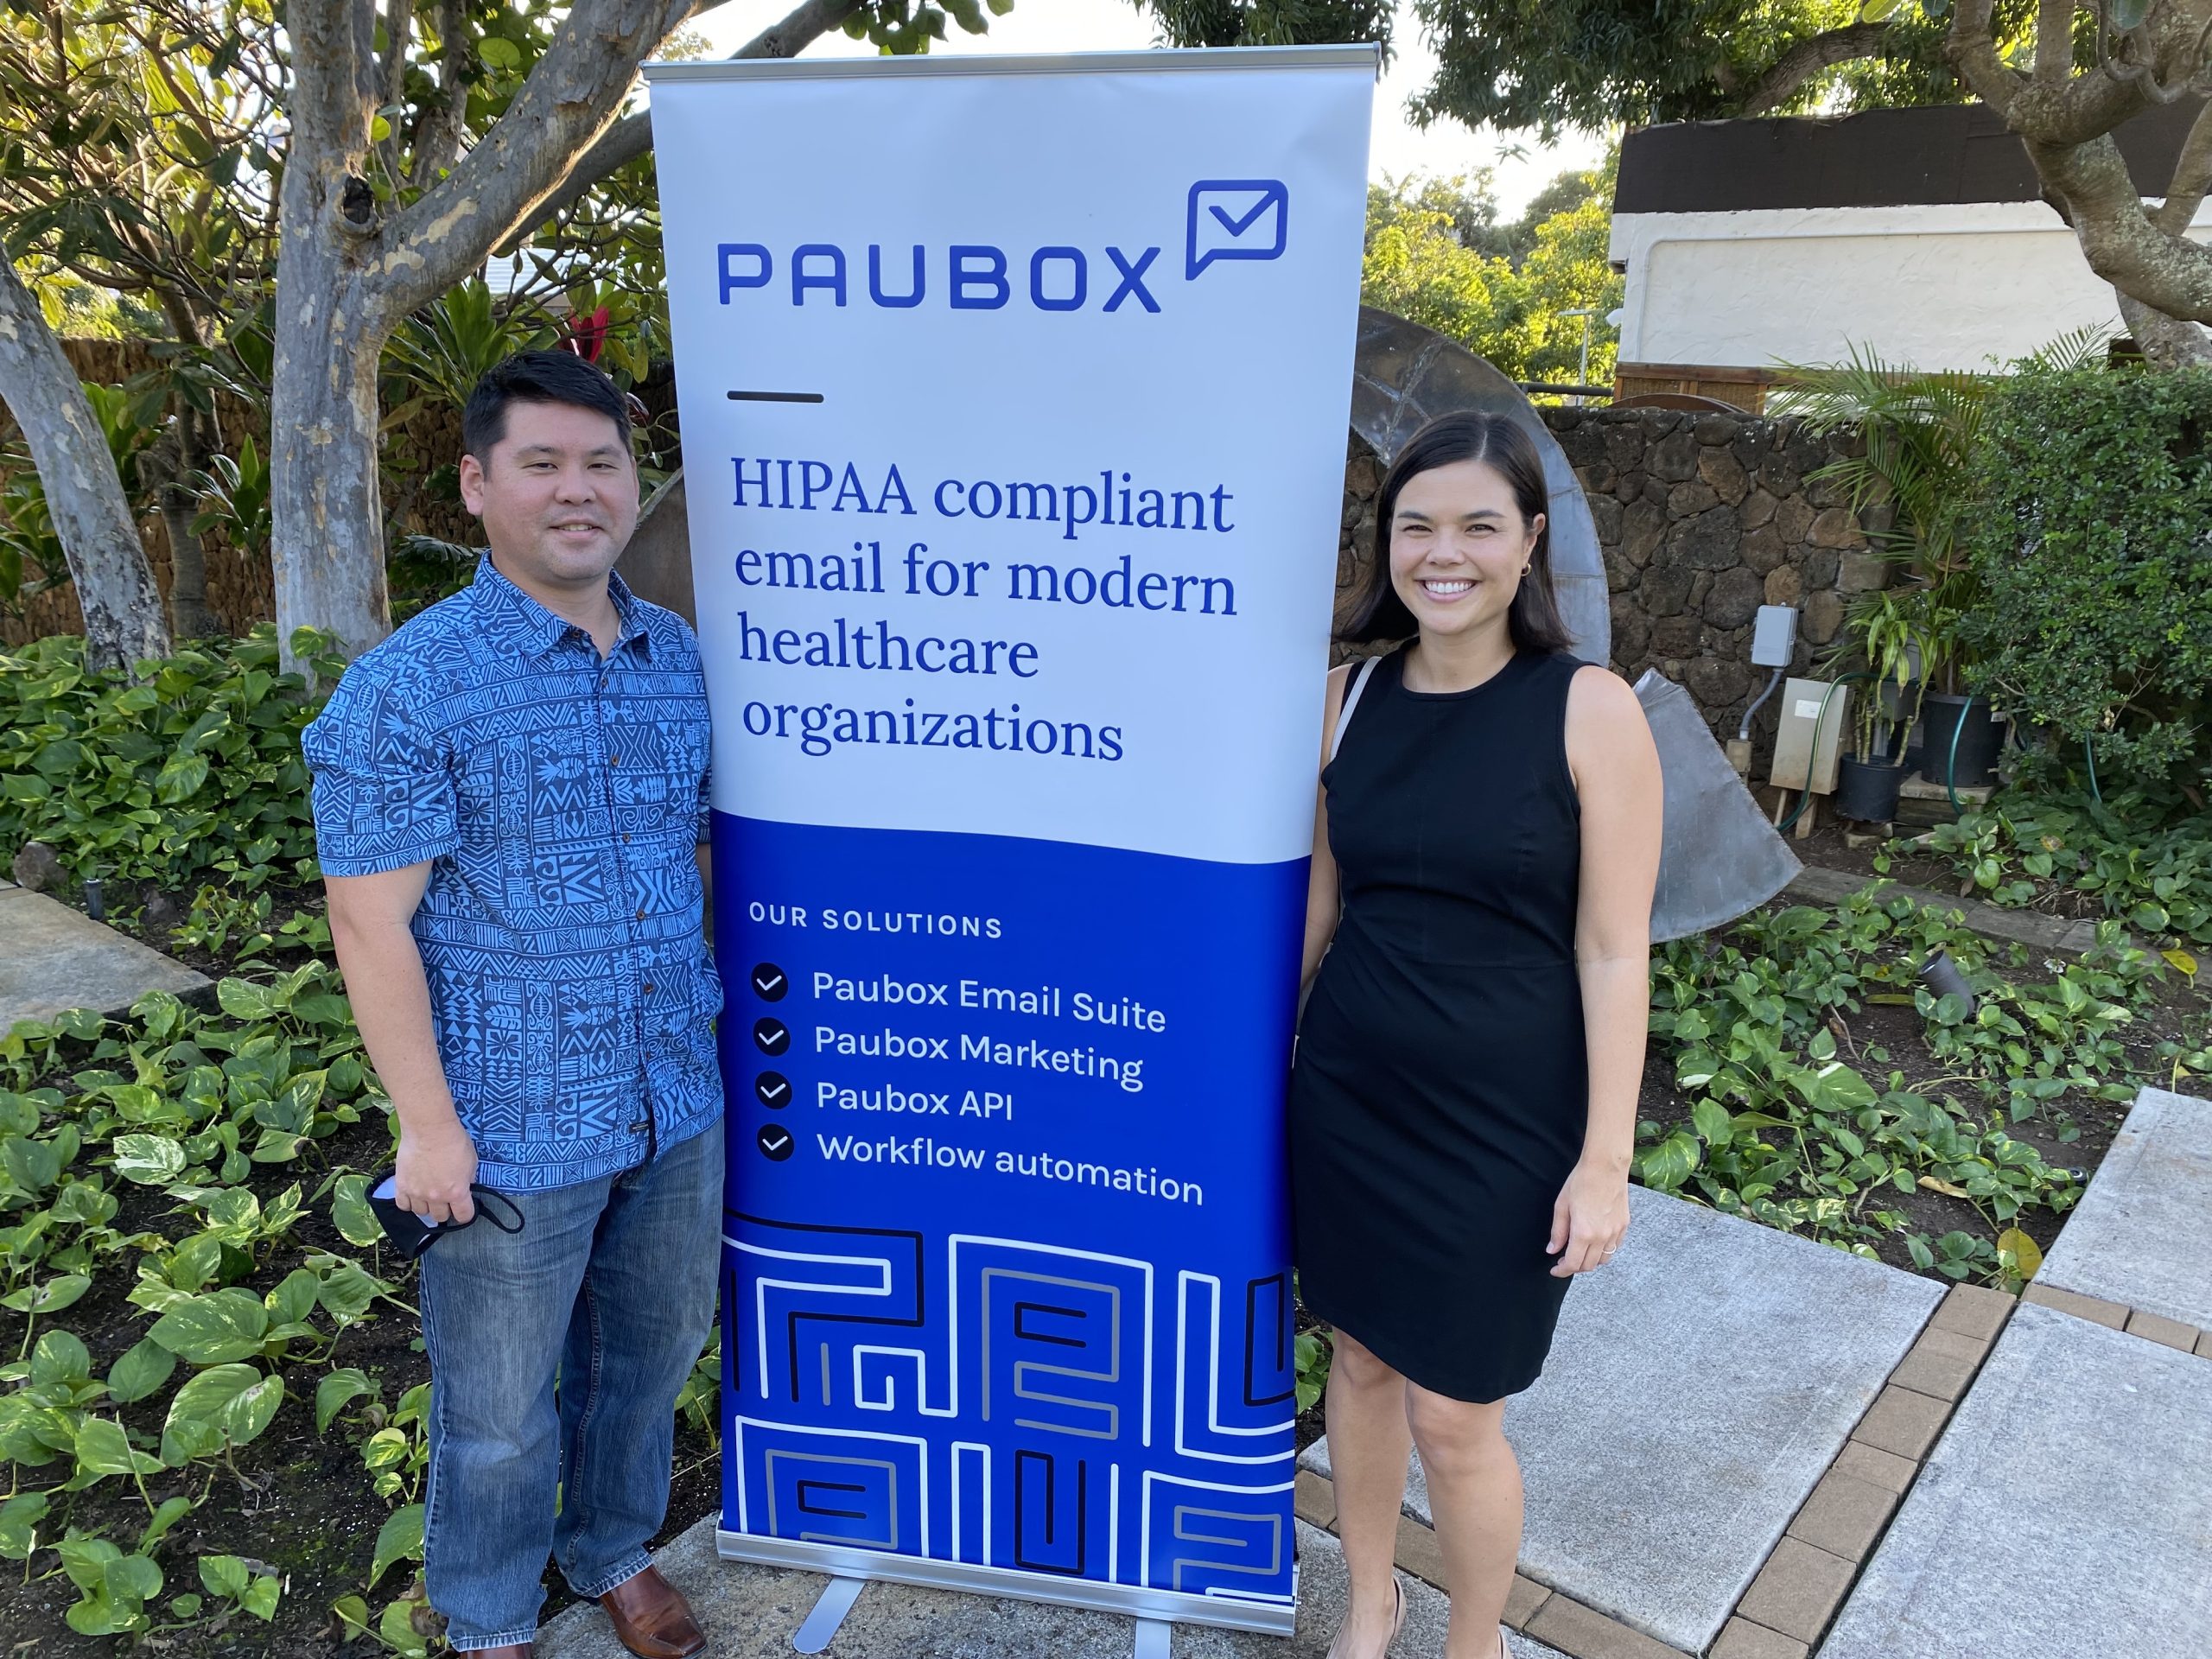 Paubox social mixer - Pacific Club - Two people posing near Paubox pop up banner